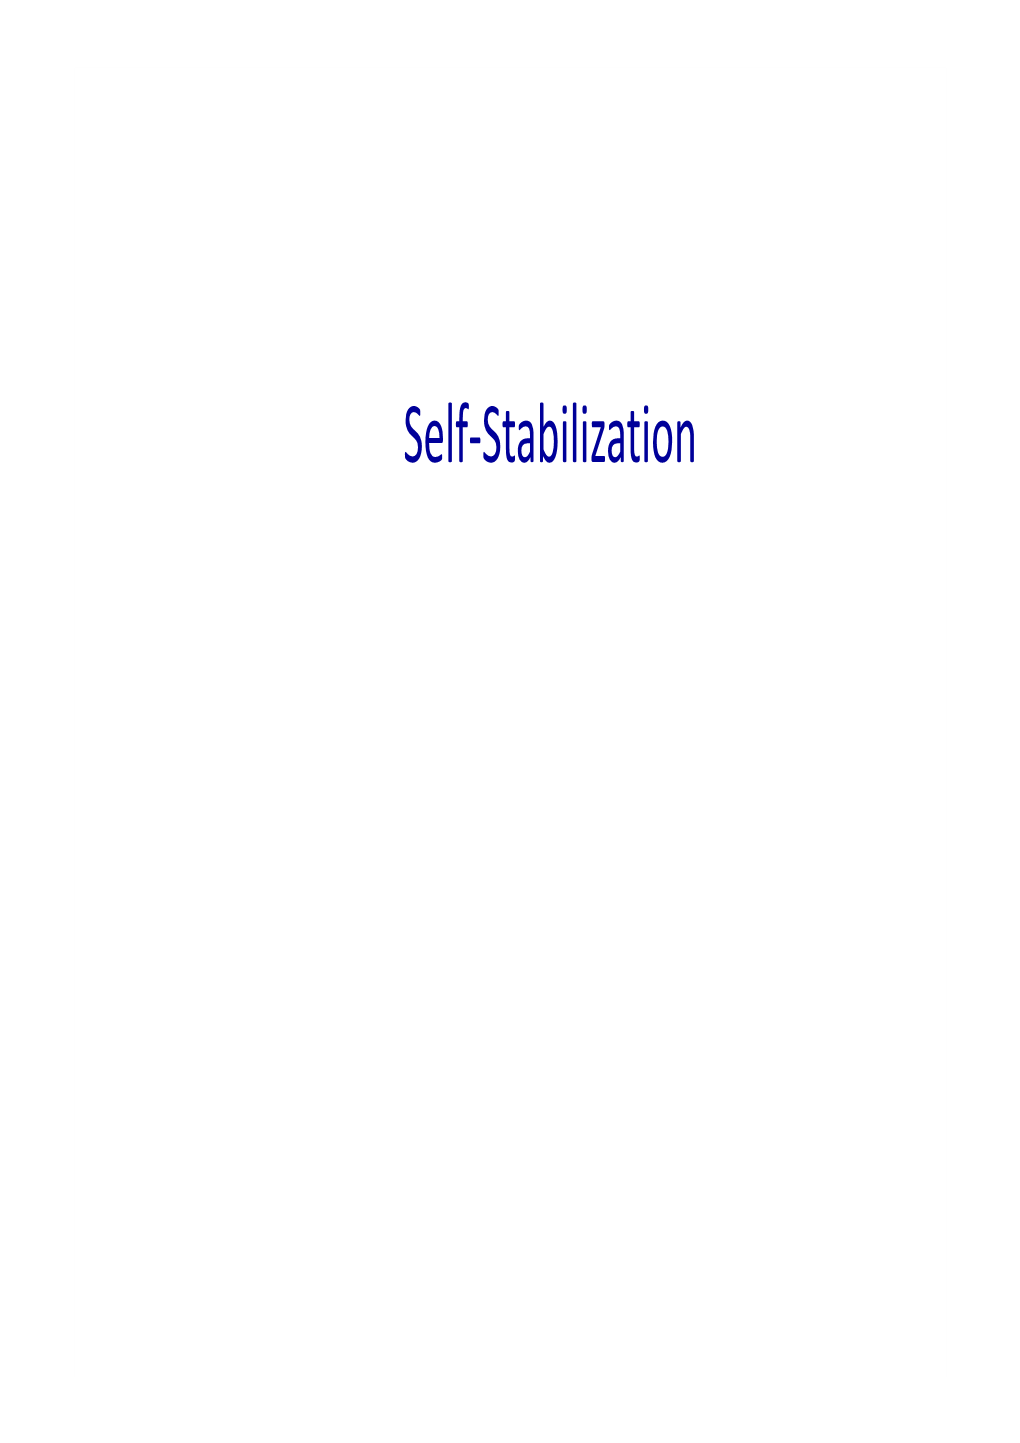 Self-Stabilization Definition of Self-Stabilization